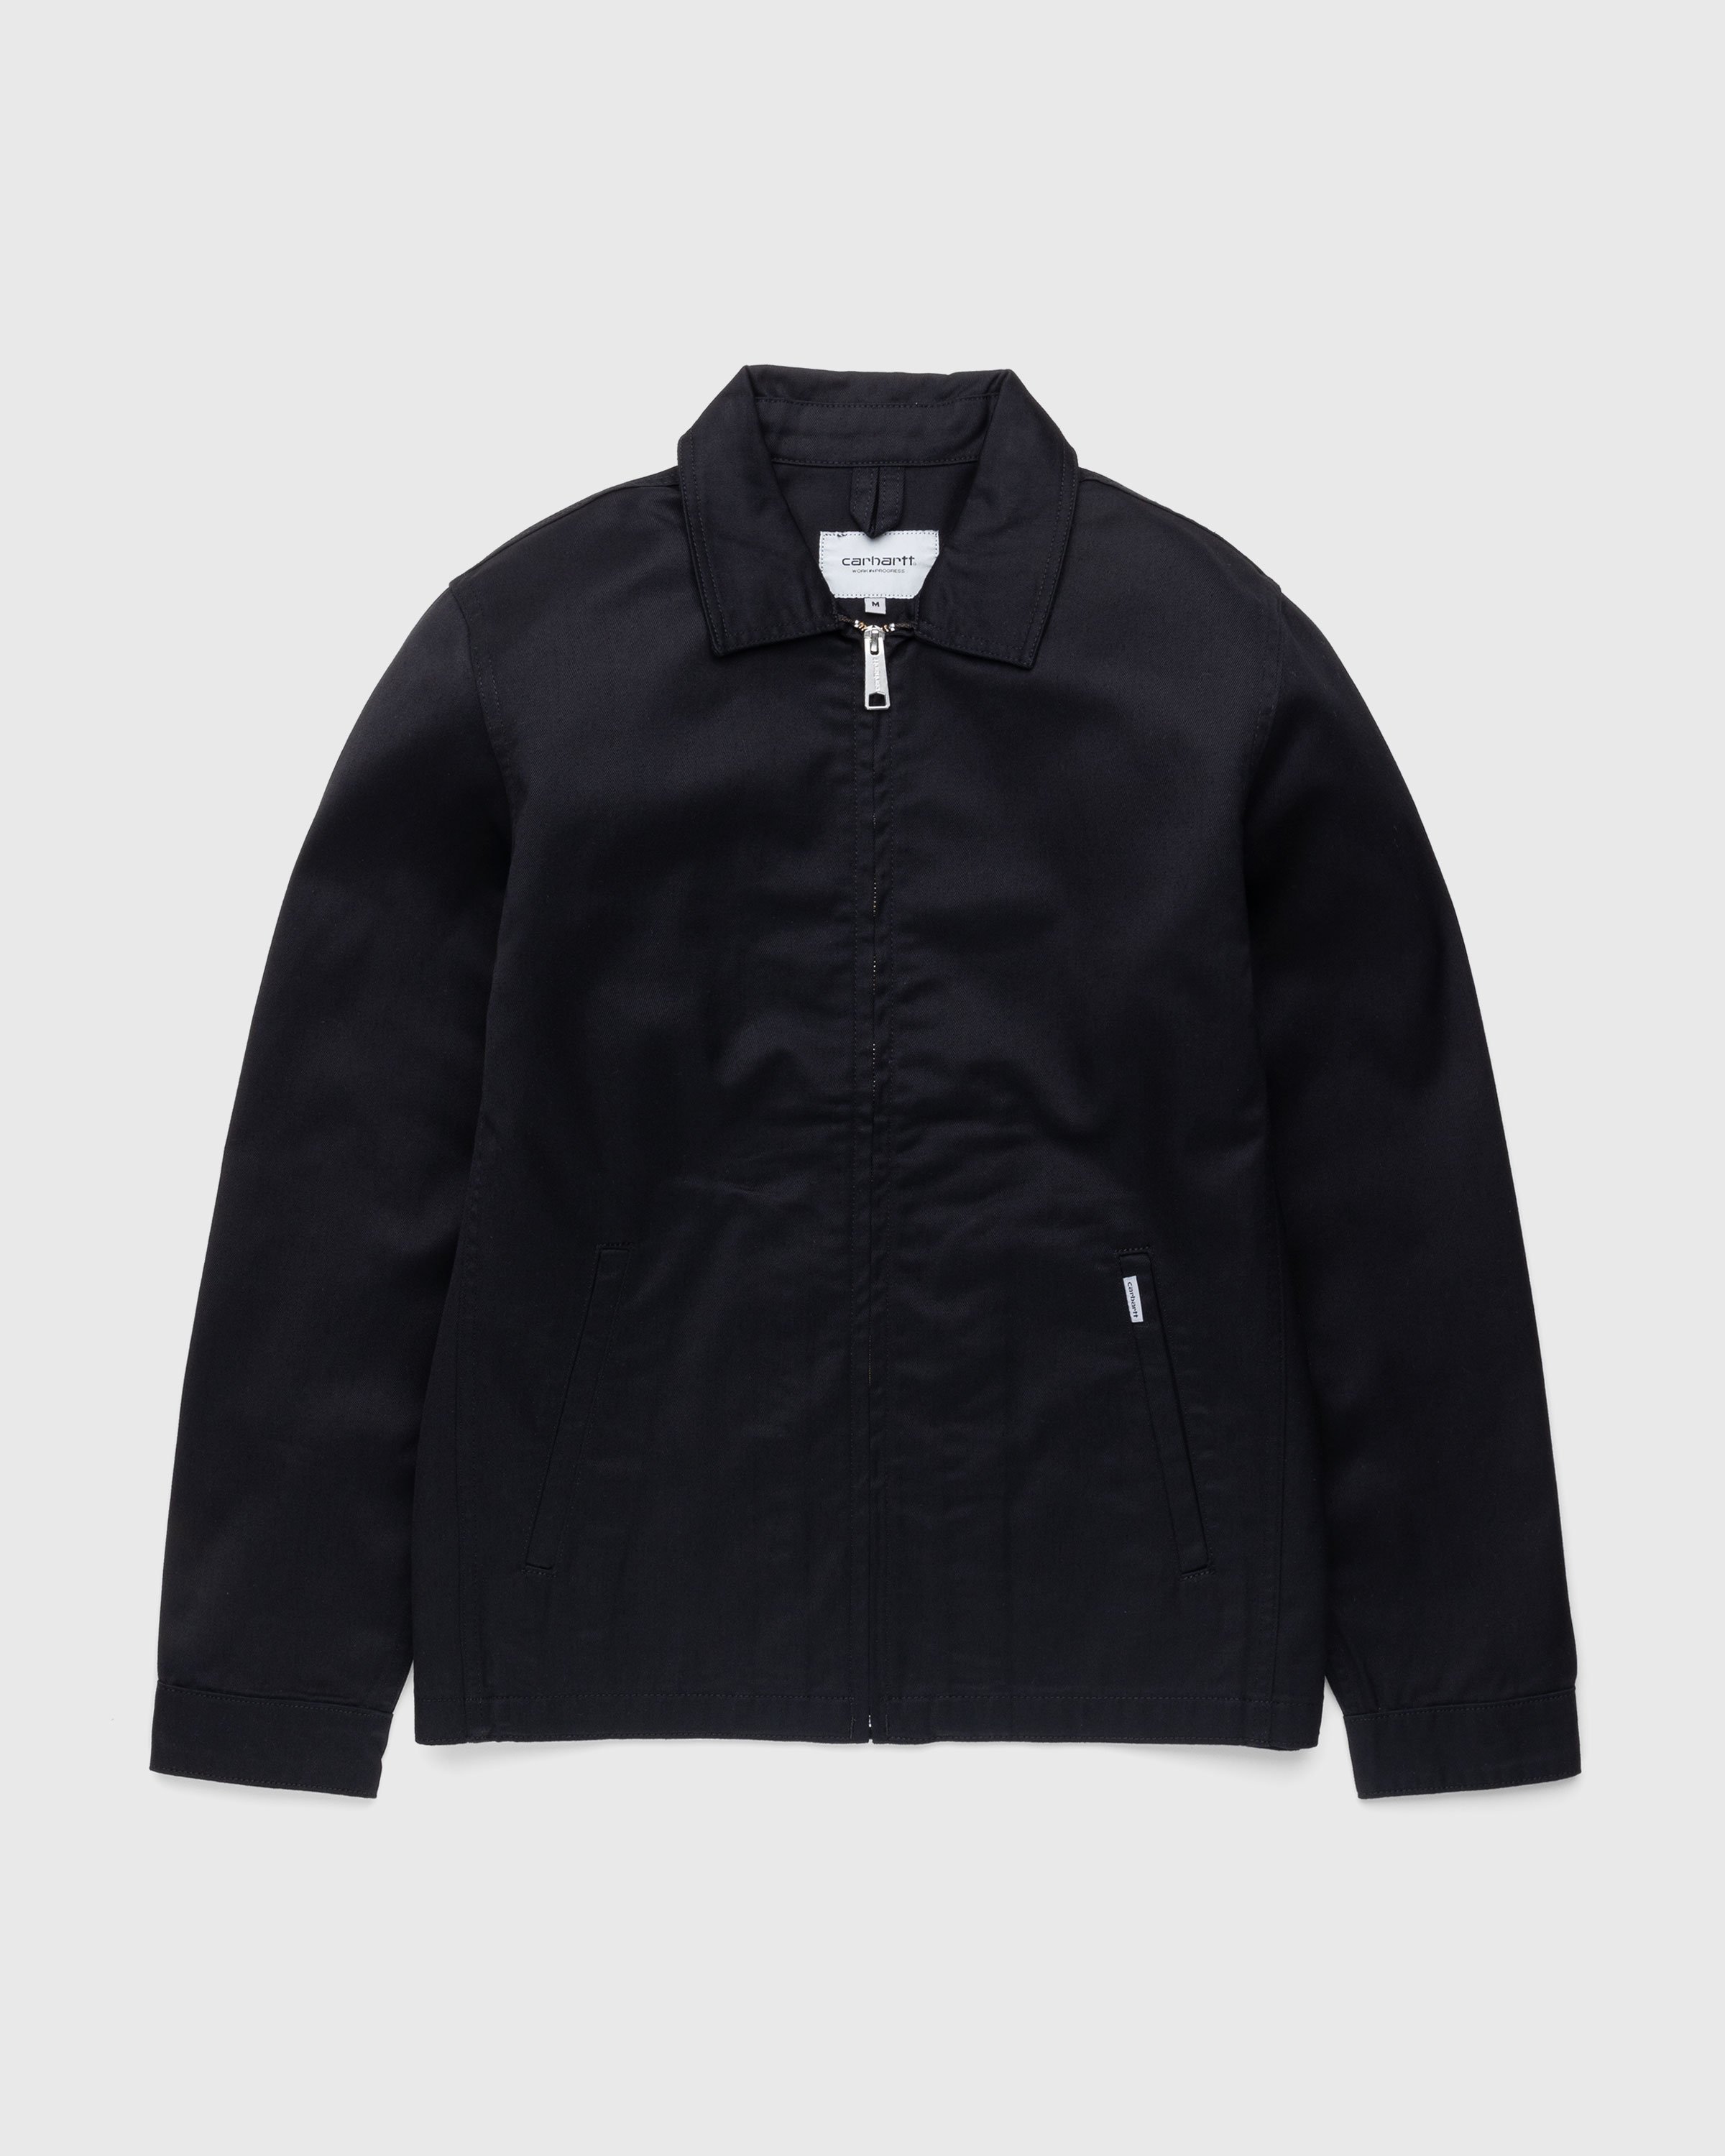 Carhartt WIP – Arlington Coat Black Rinsed